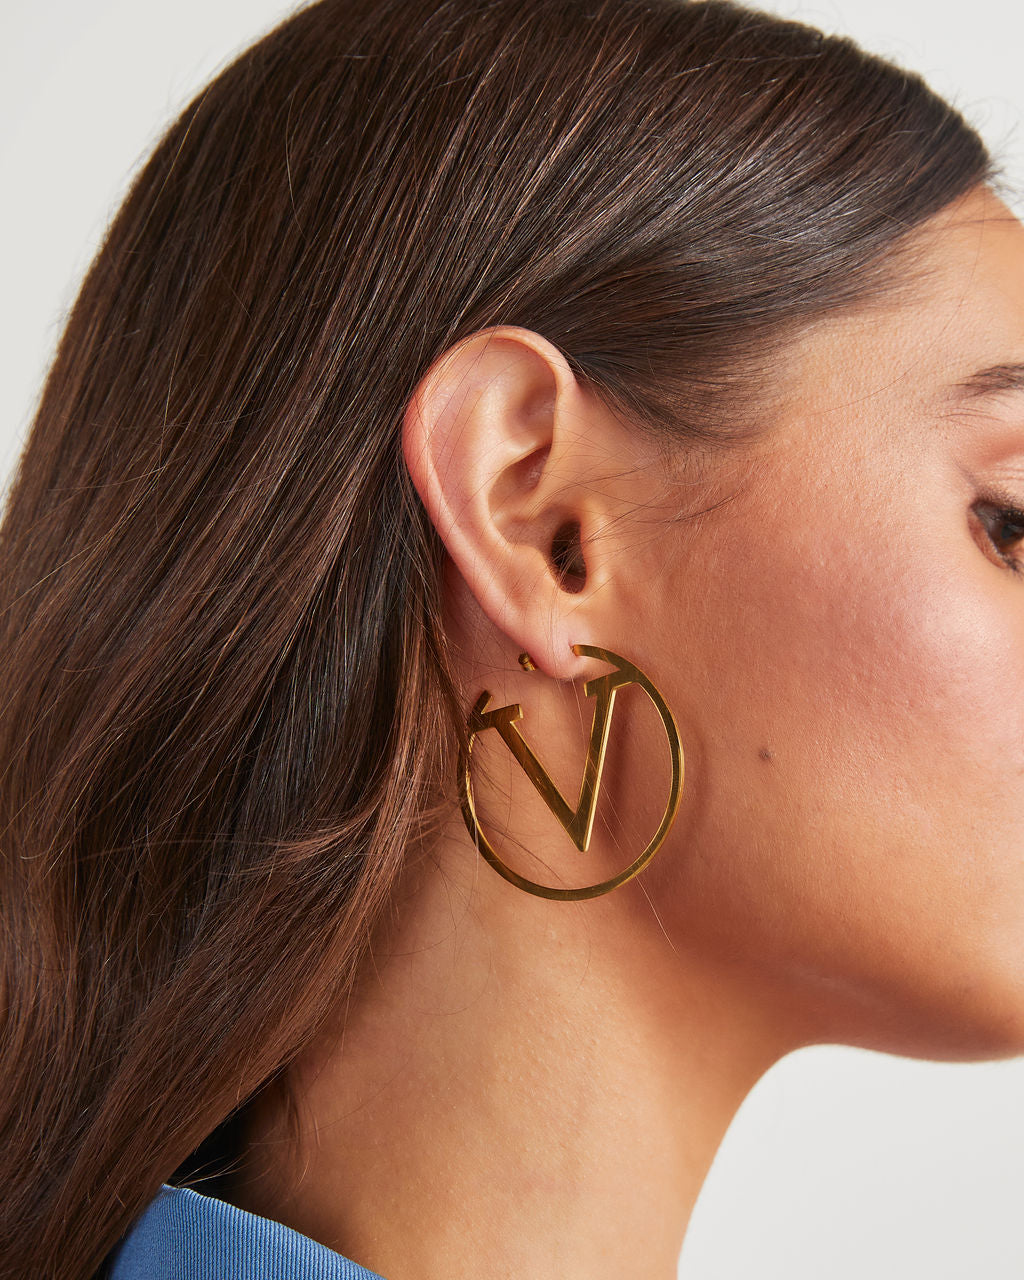 Original Fendi Rose Gold Hoops Earrings 